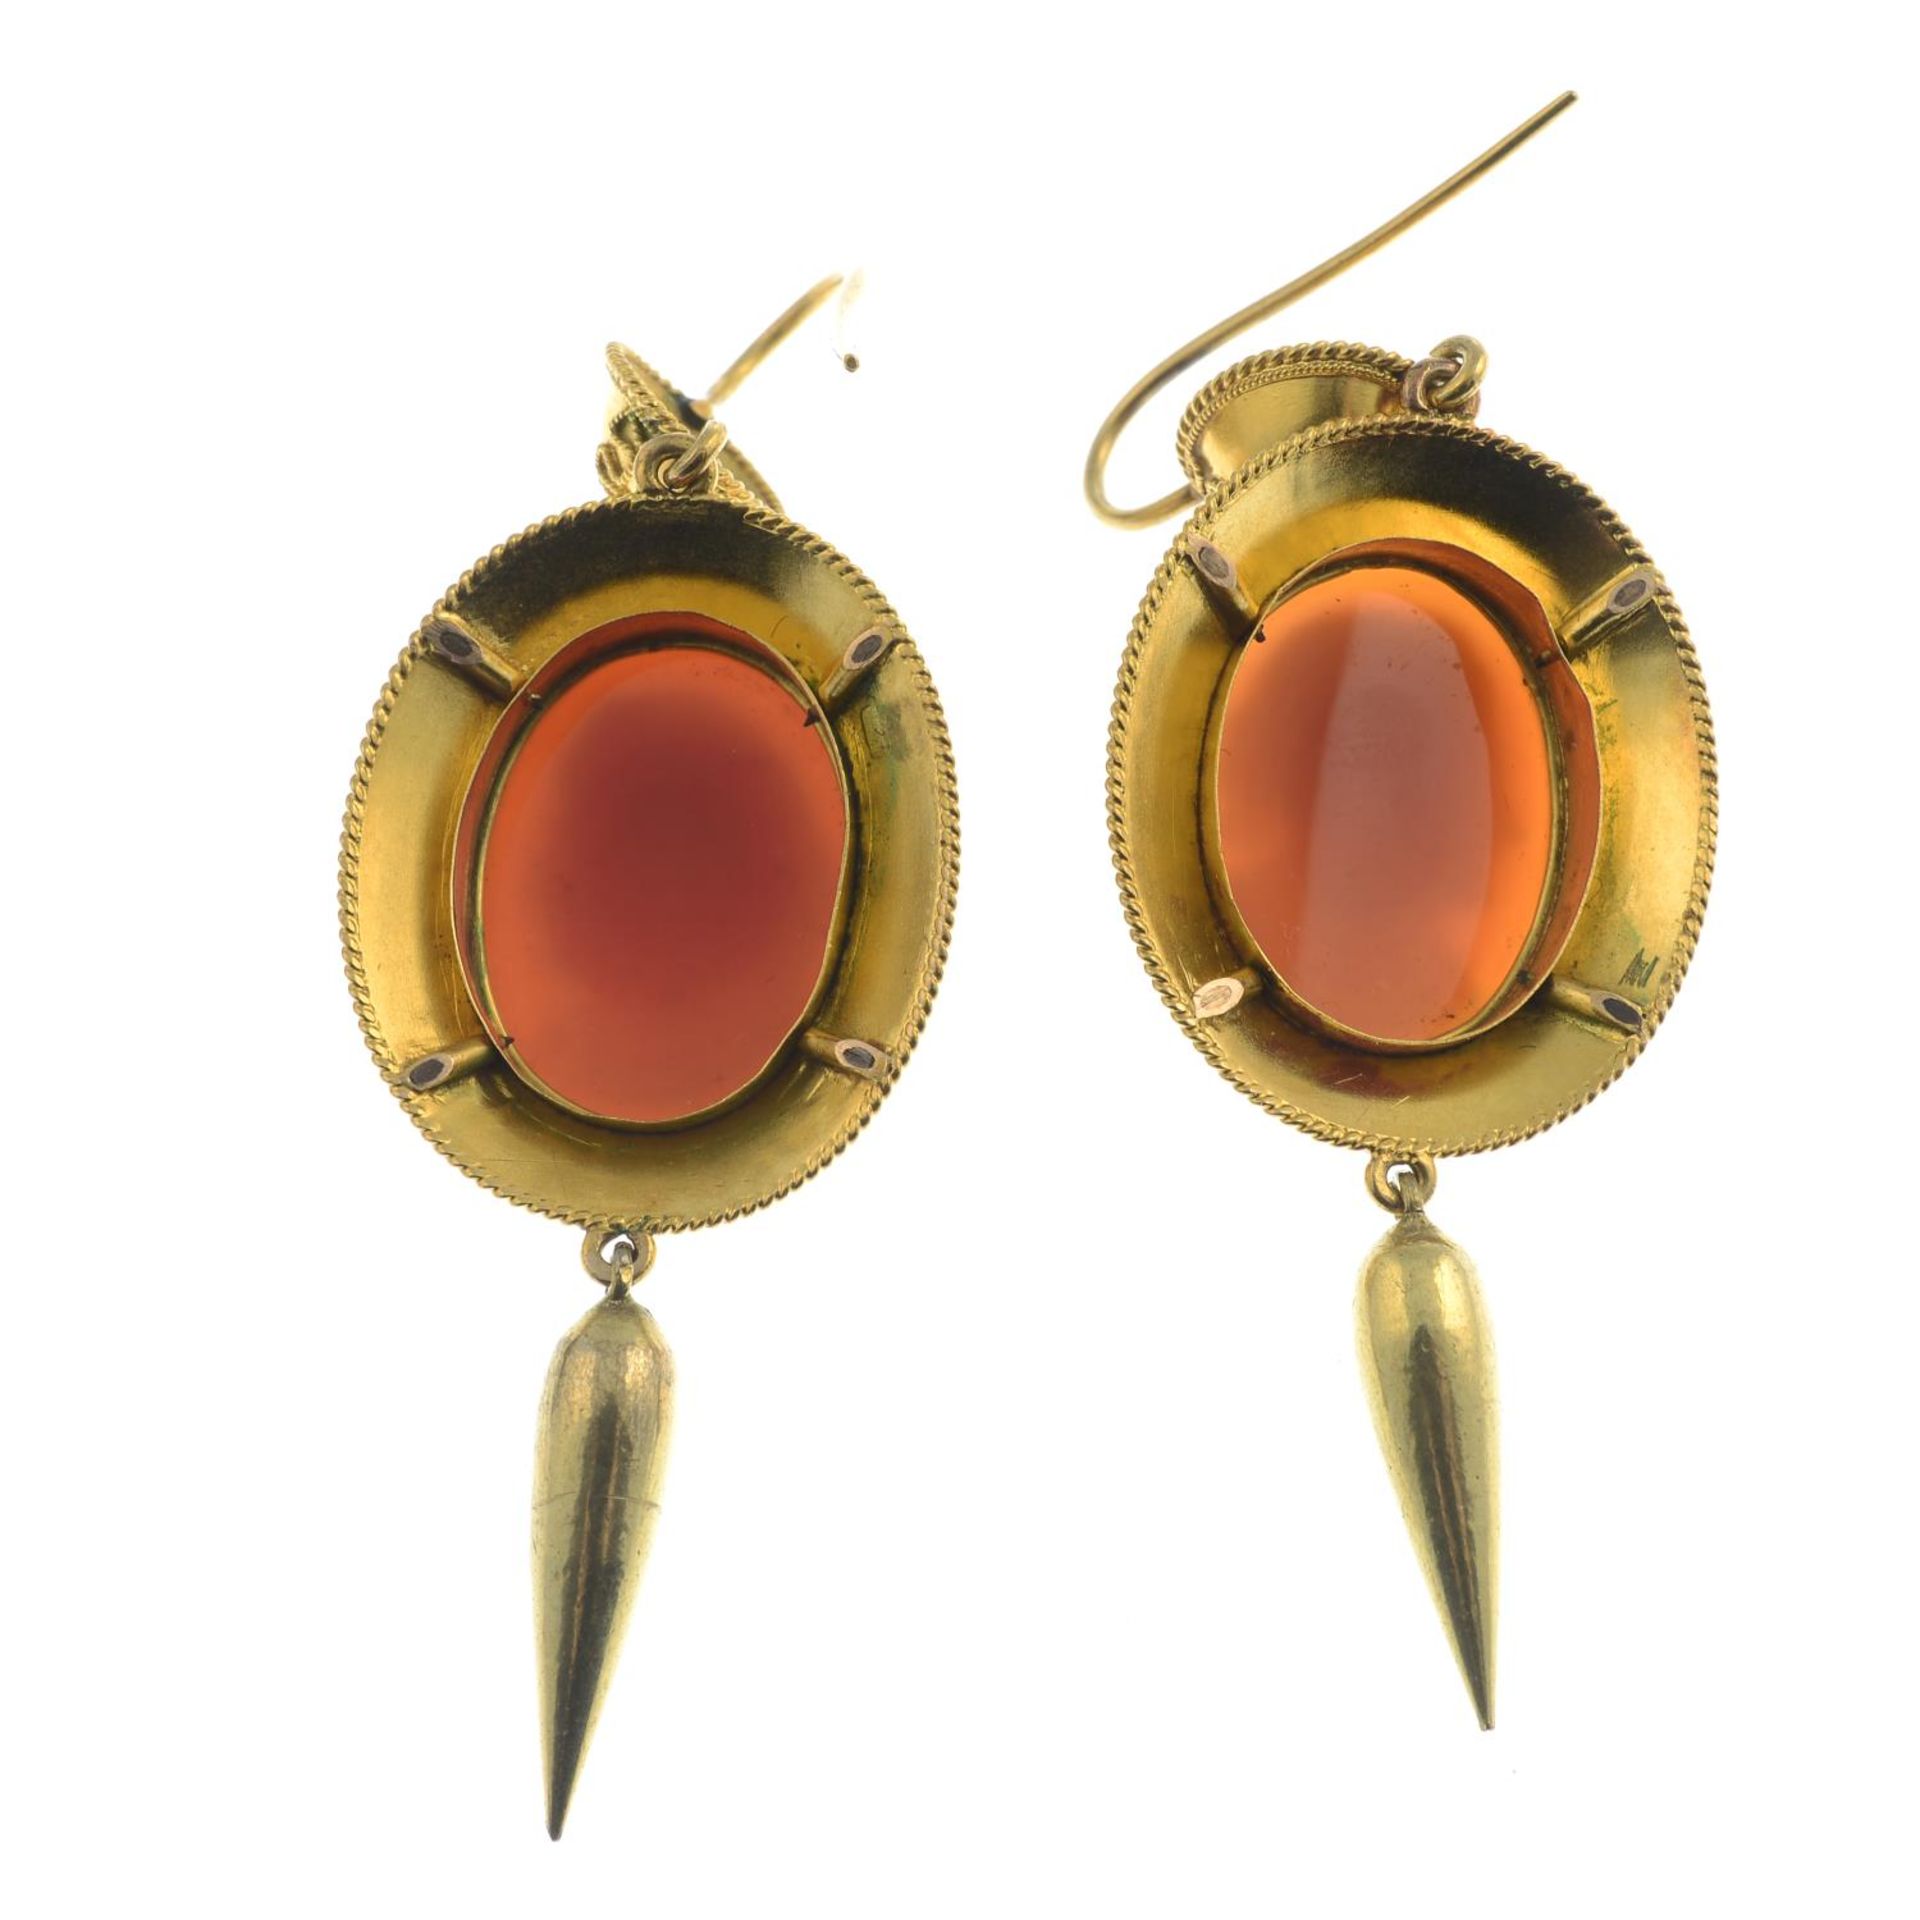 A pair of mid 19th century gold sardonyx cameo earrings.Length 6.8cms. - Image 2 of 2